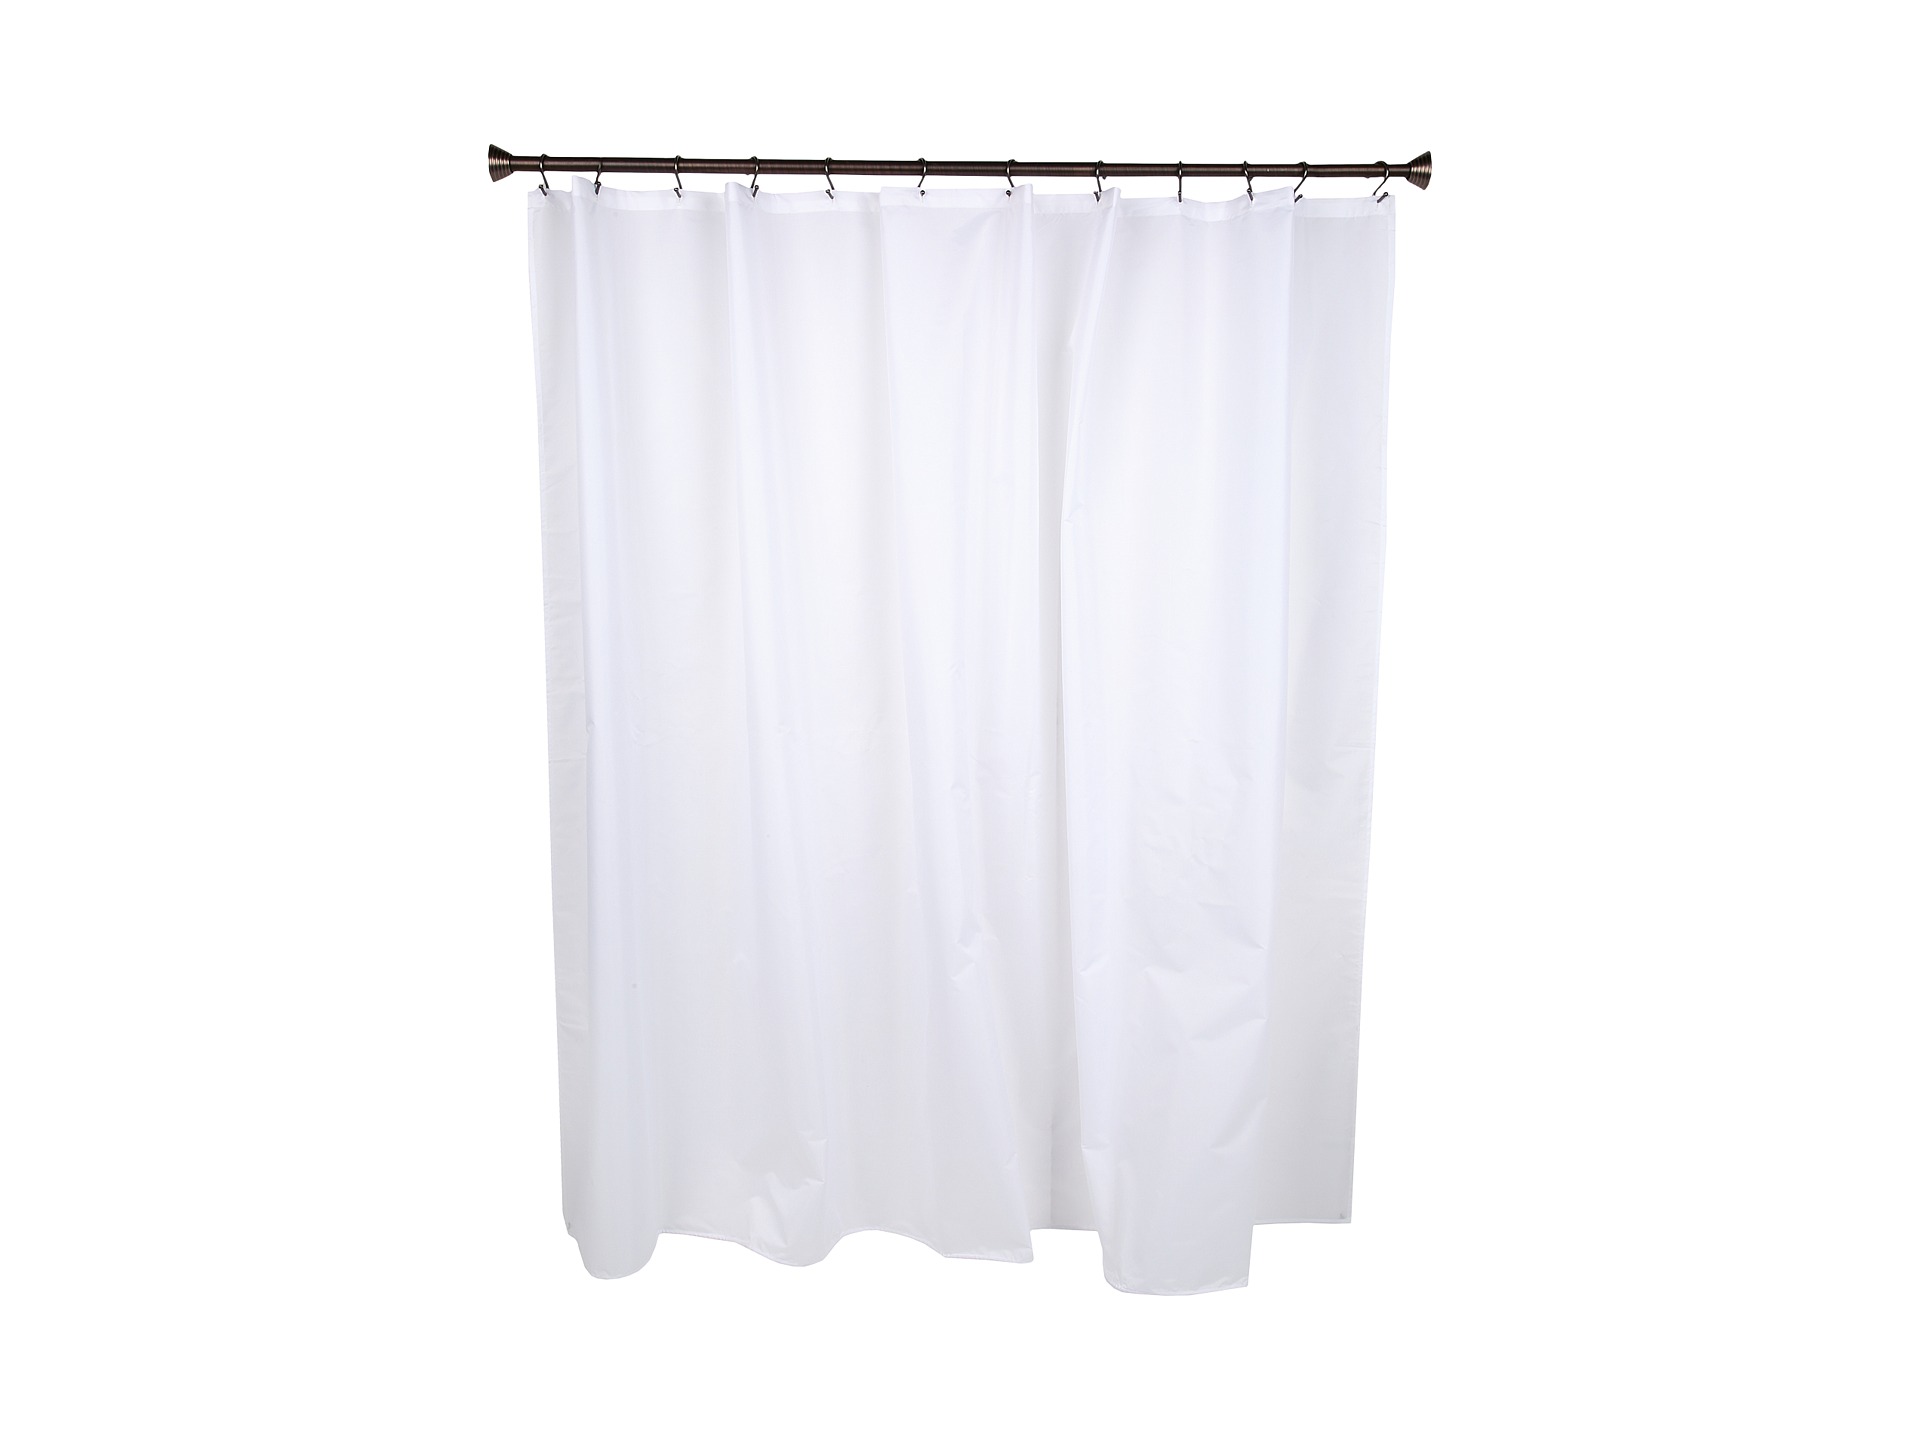 InterDesign   Waterproof Fabric Shower Curtain/Liner   X Wide